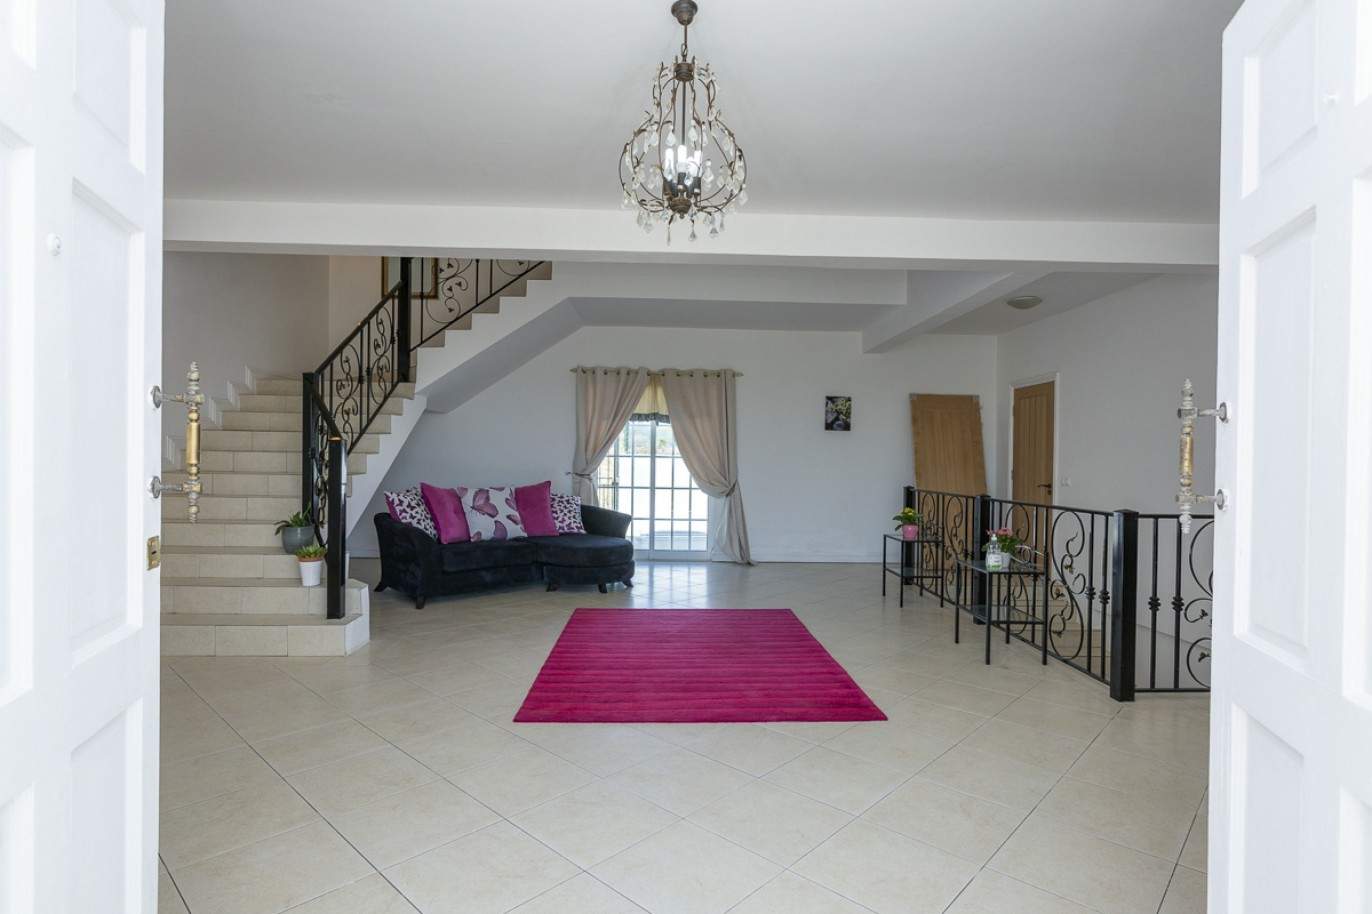 4 Bedroom Villa with sea view, for sale in Boliqueime, Algarve_209942